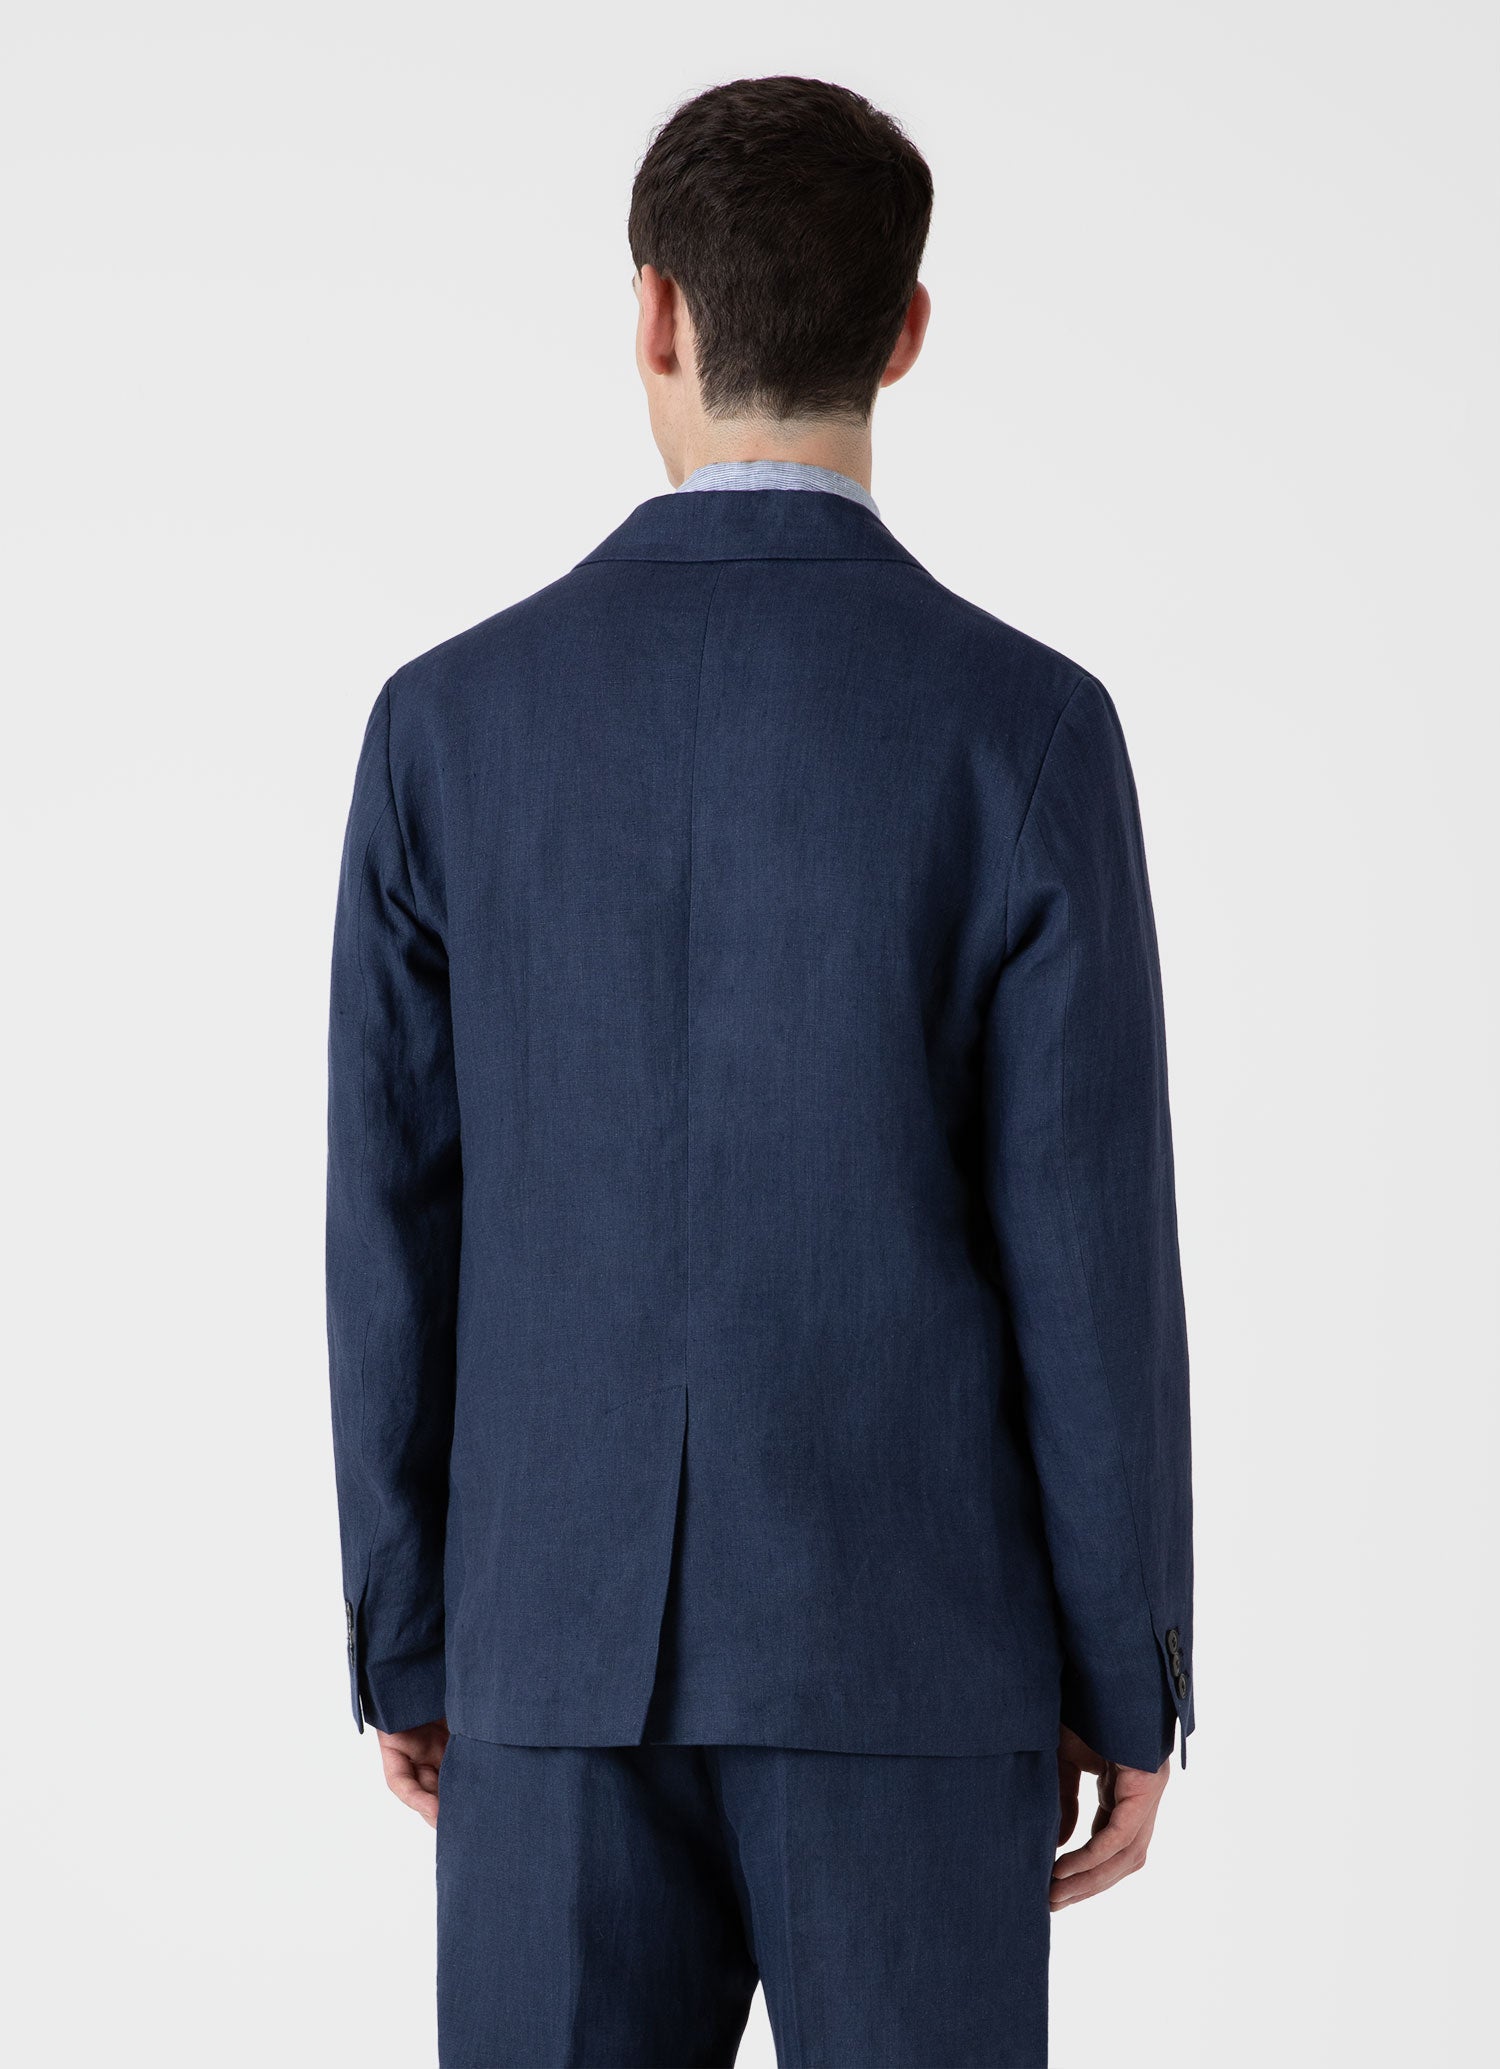 Men's Linen Jacket YOU AND ME Hemp Beige Regular Casual Fit Top Quality